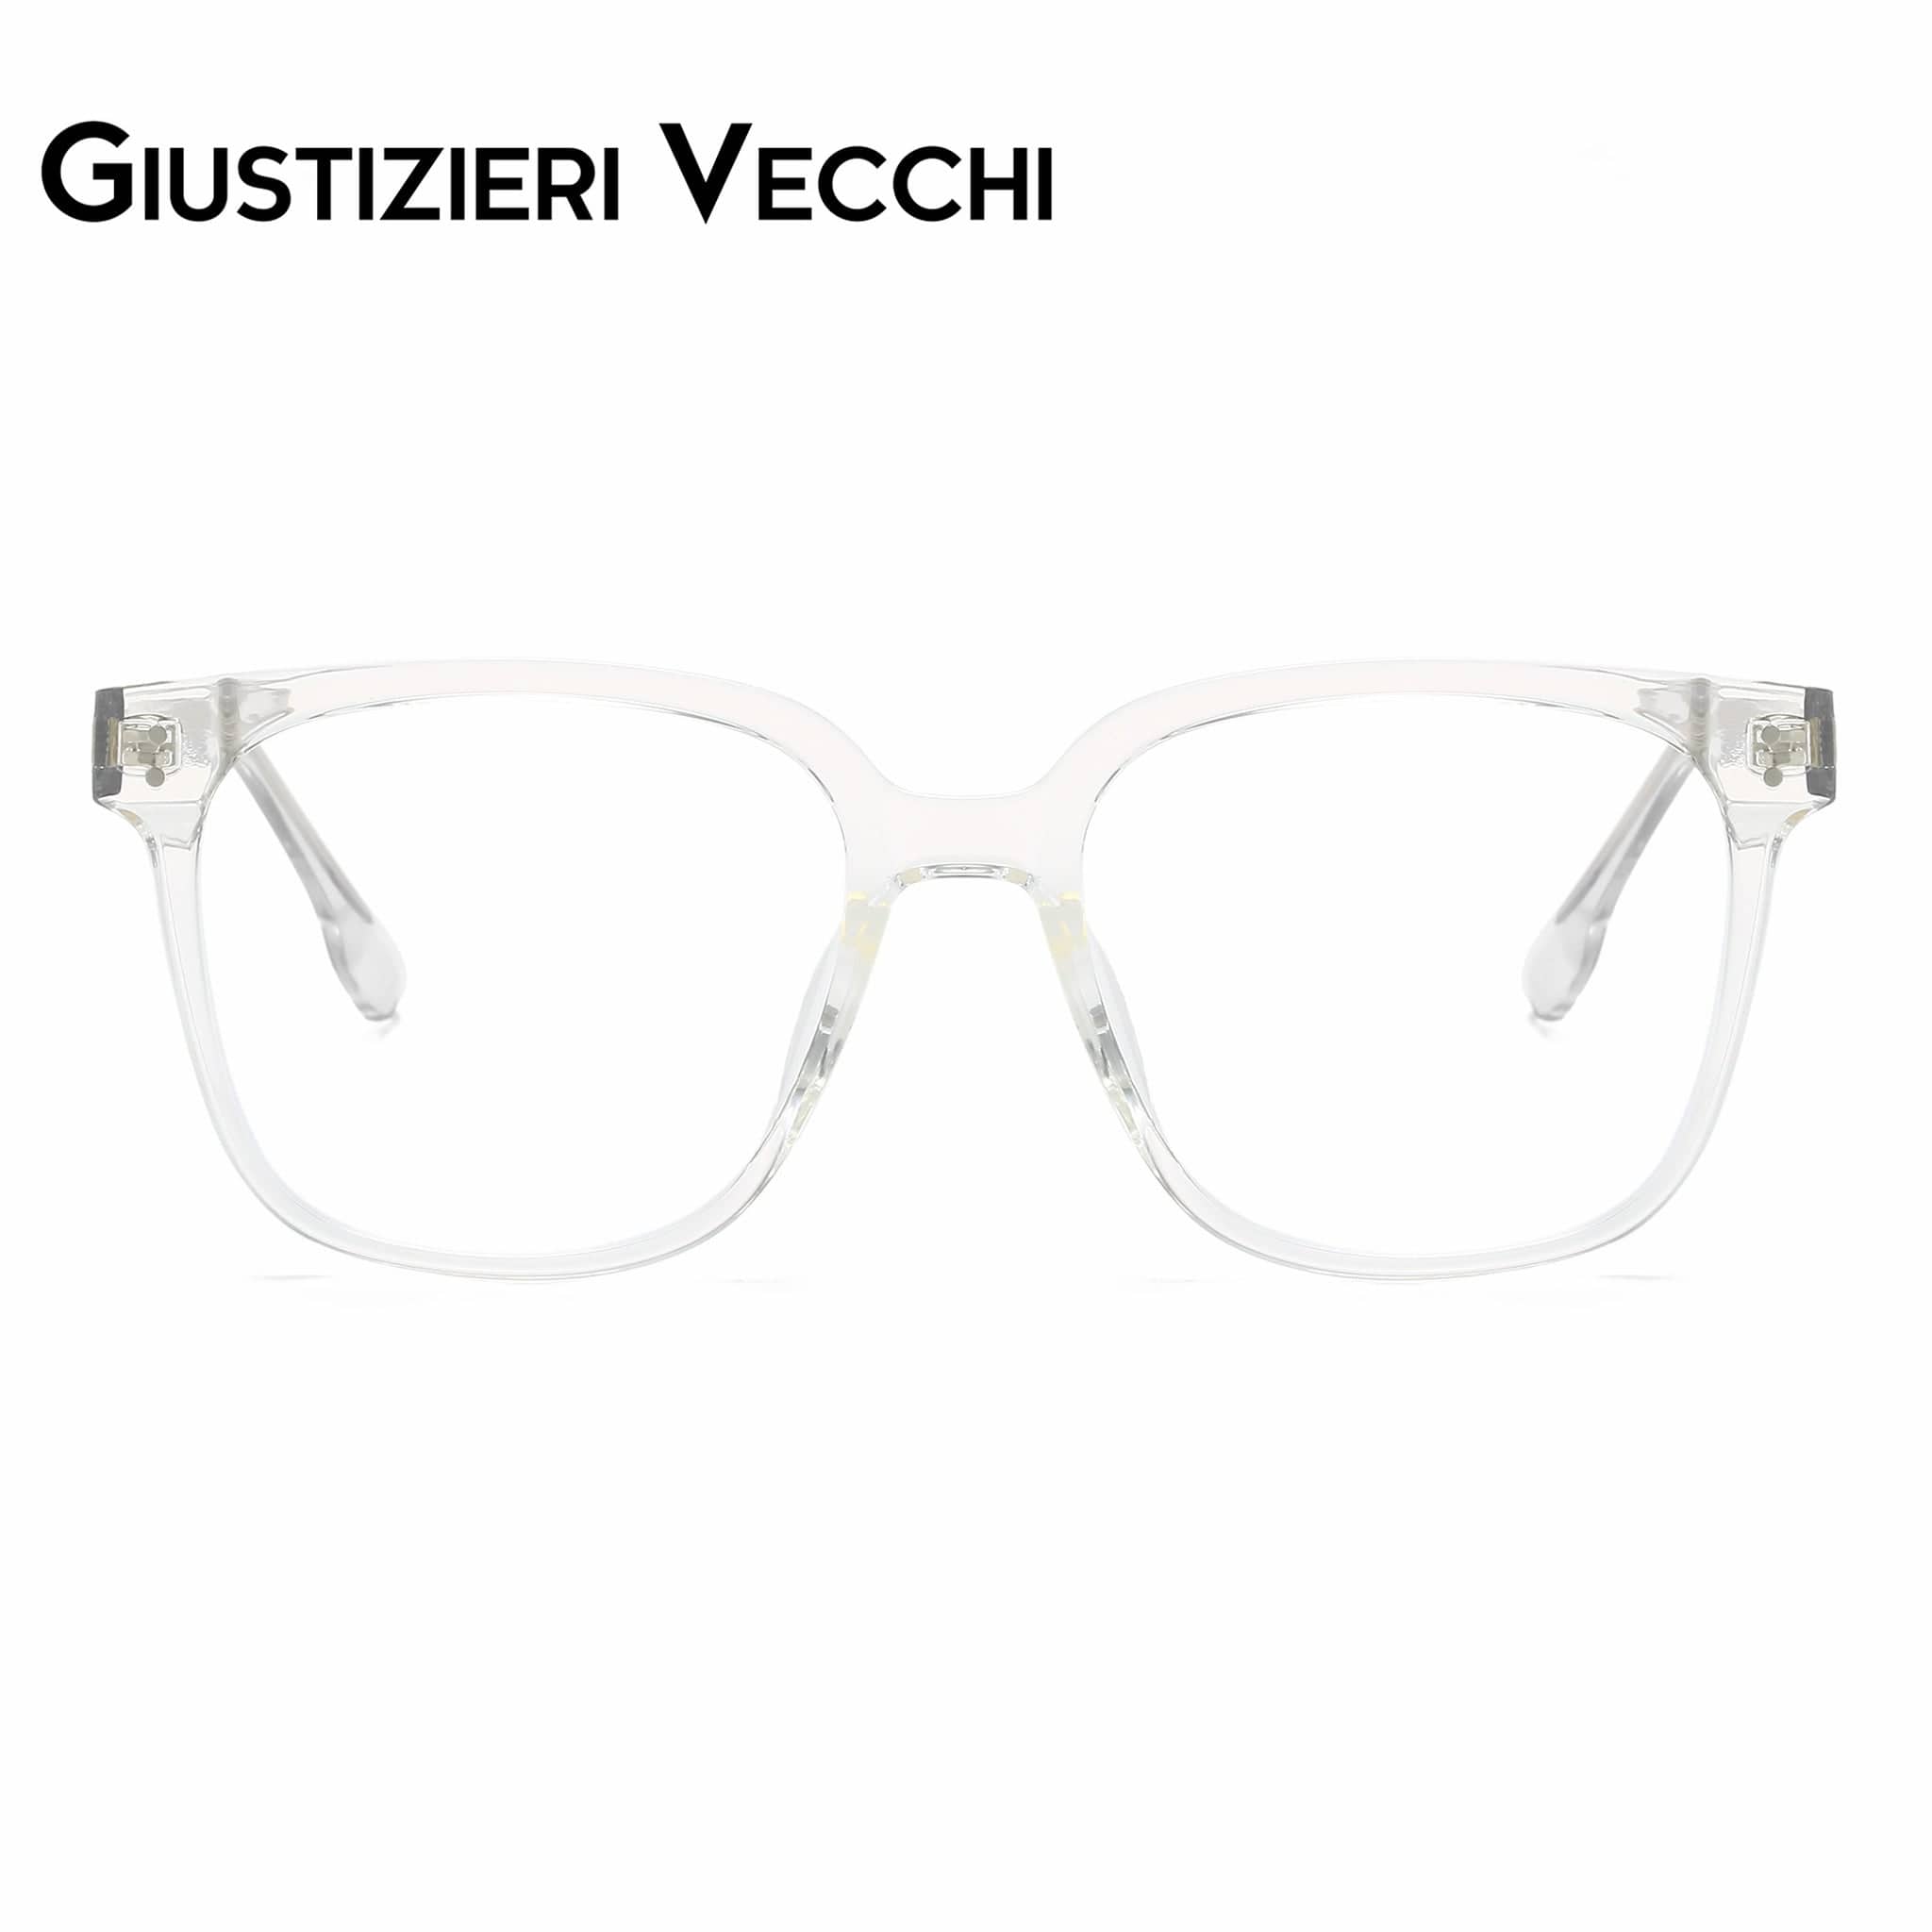 GIUSTIZIERI VECCHI Eyeglasses Medium / Clear Crystal Mystic Moon Uno